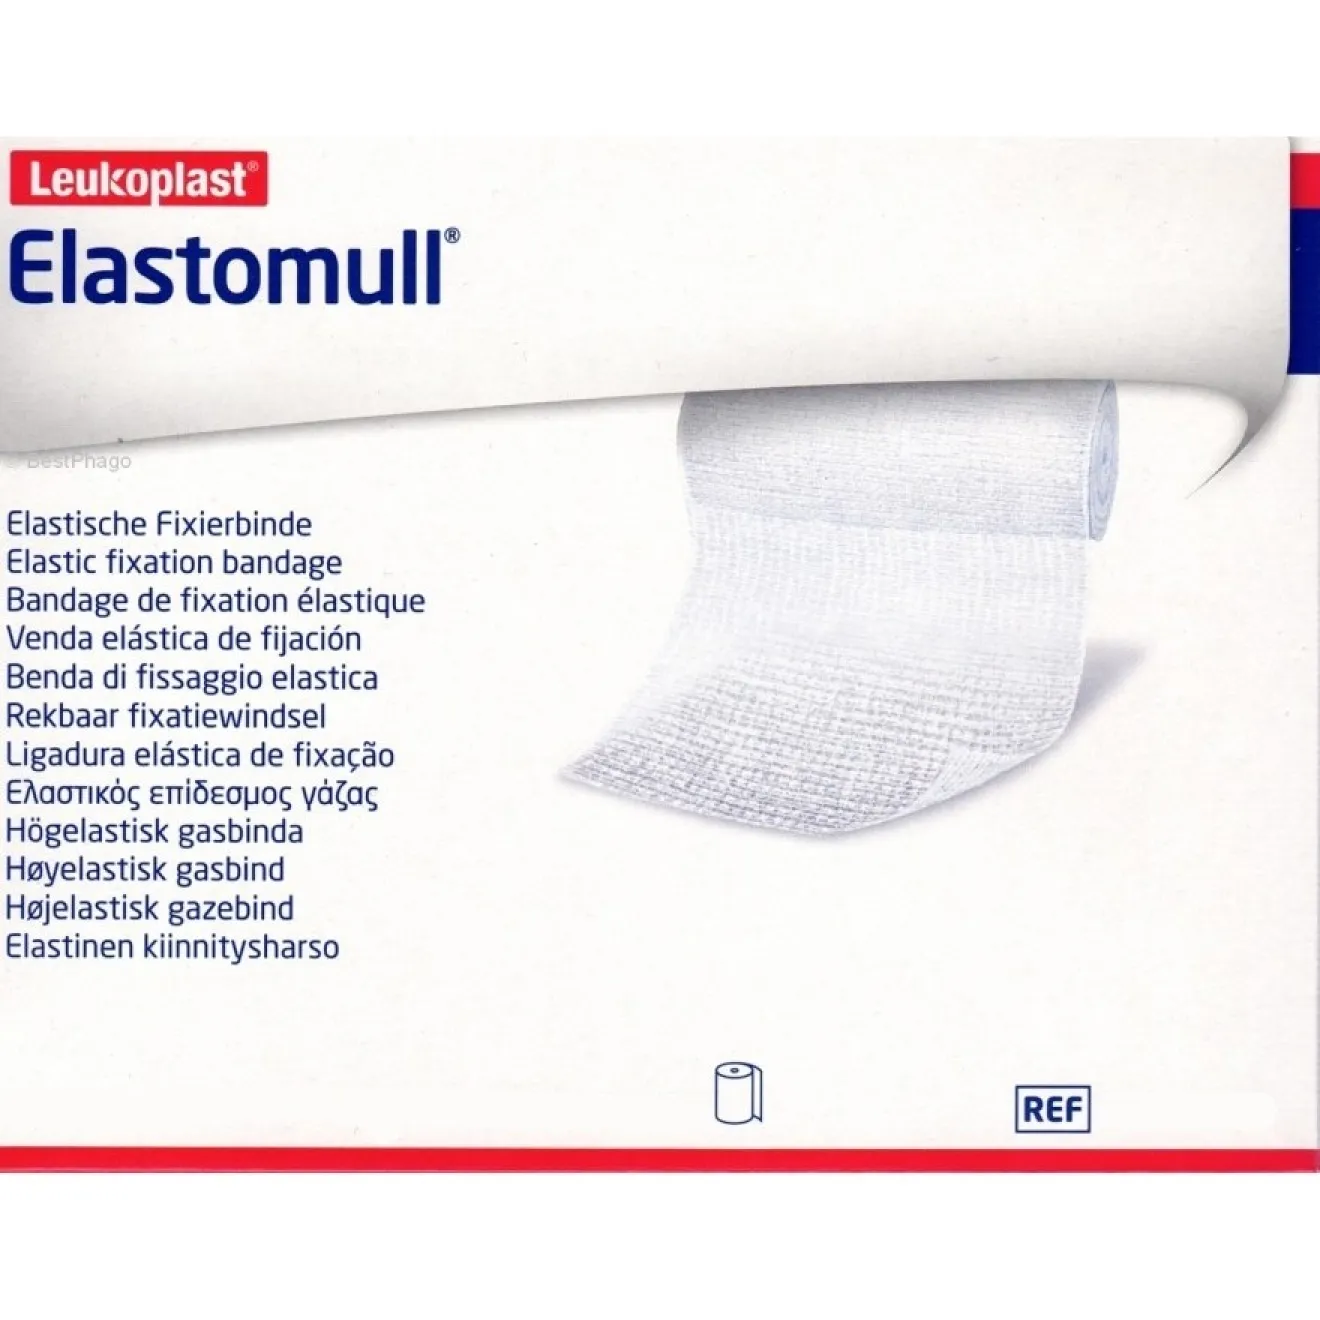 Elastomull 4mx4cm elastische Fixierbinde 2099 20 ST